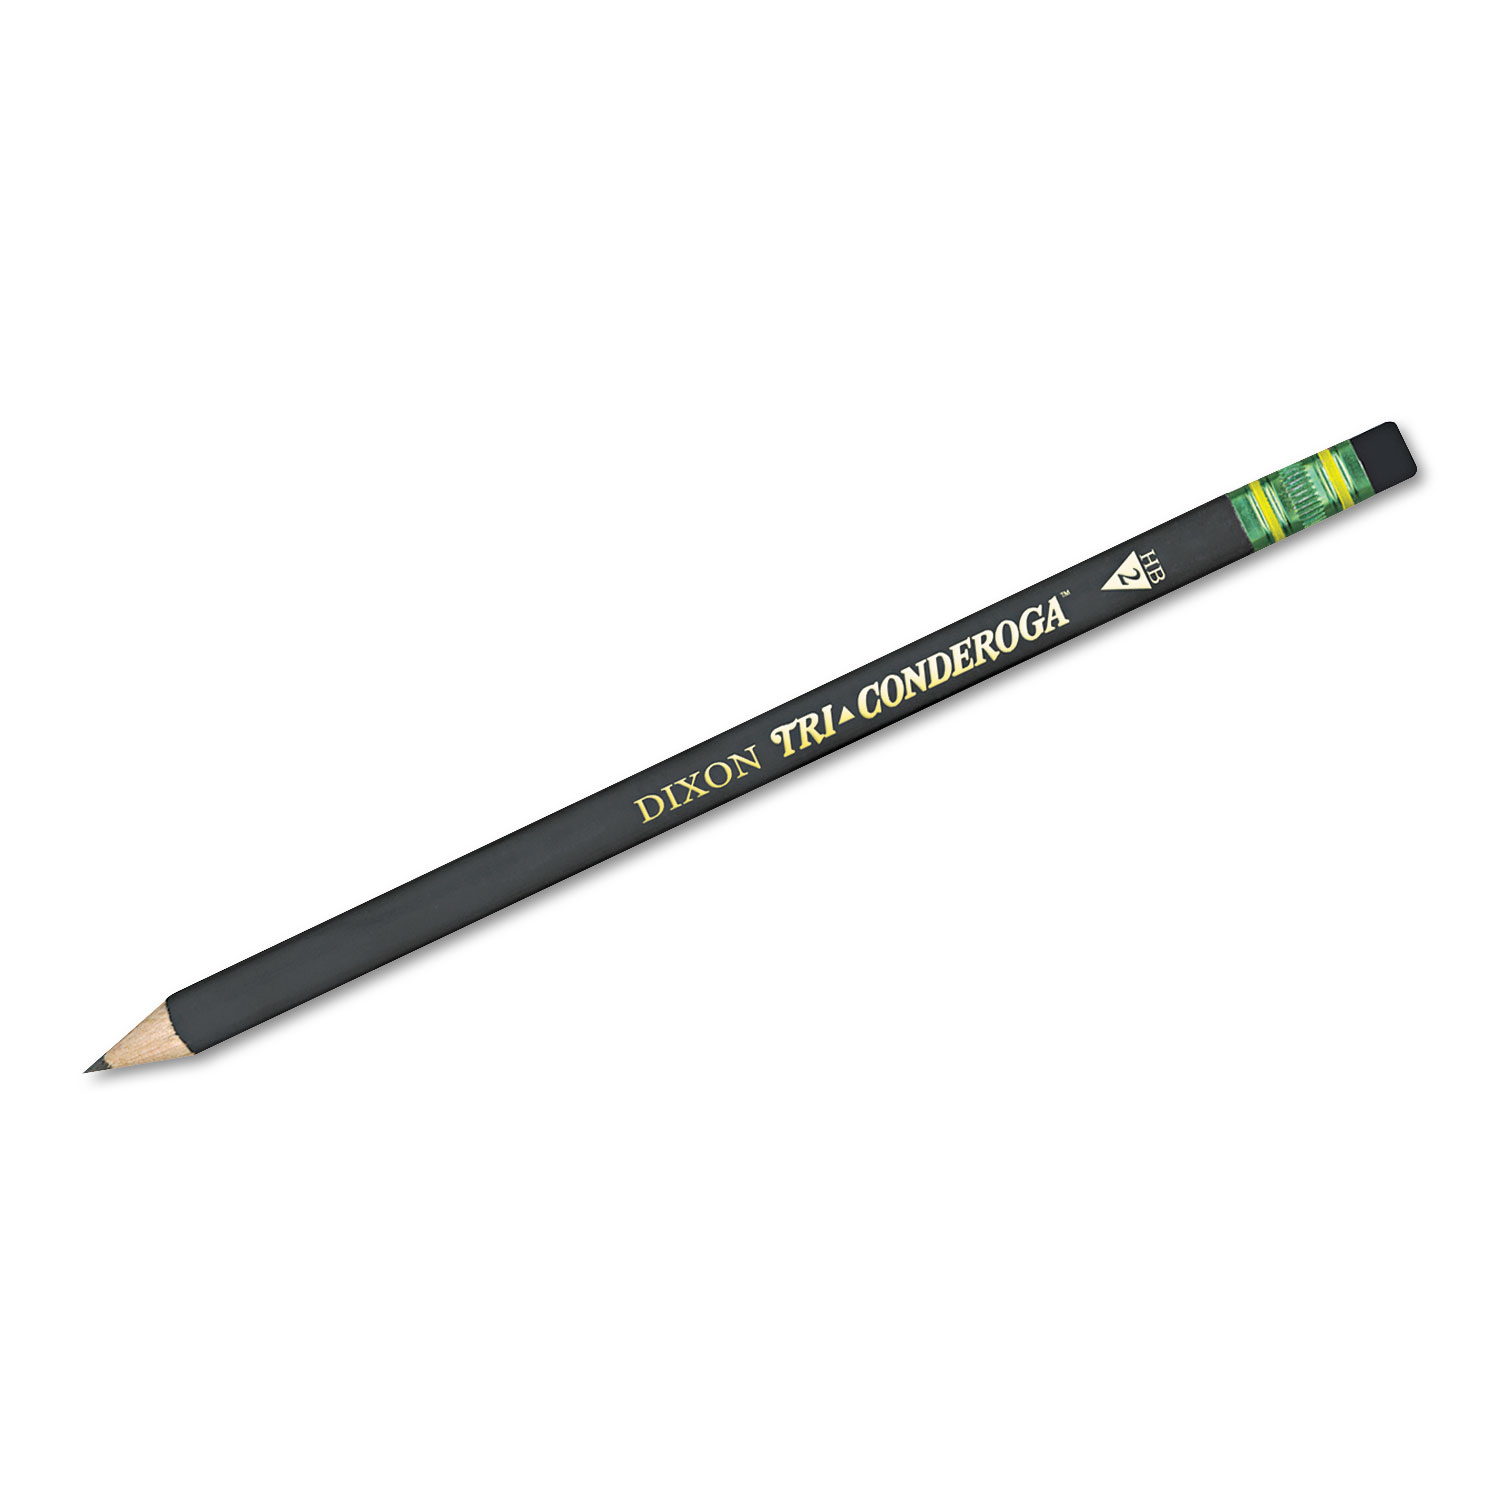  Dixon 22506 Tri-Conderoga Triangular #2 Woodcase Oversized Pencil, HB (#2), Black Lead, Yellow Barrel, 3/Pack (DIX22506) 